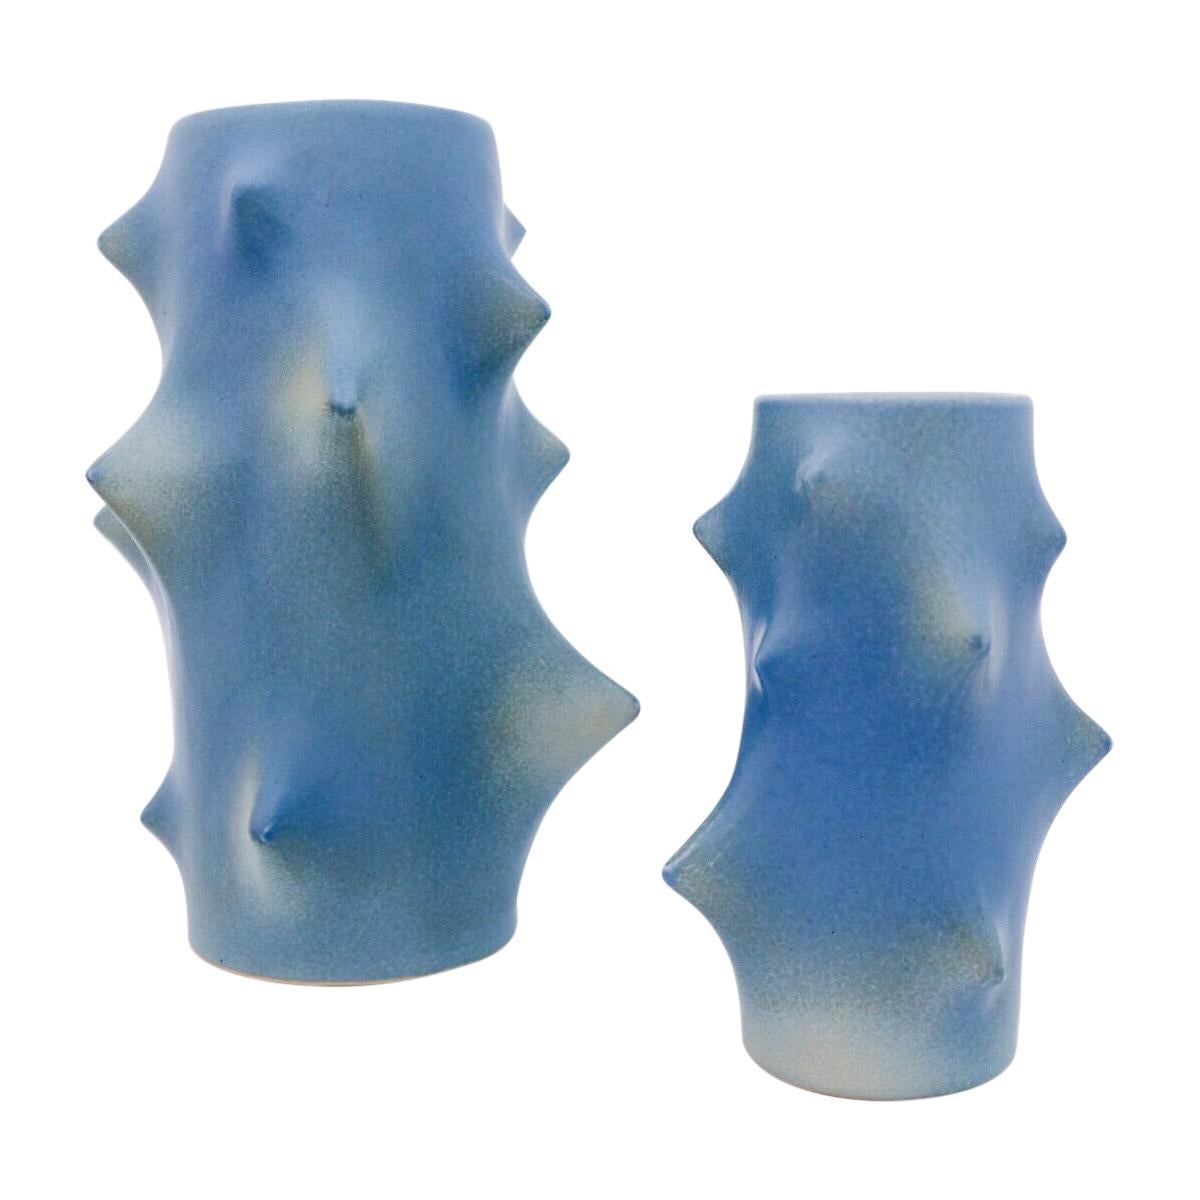 Pair of Vases Ceramics Light Blue Knud Basse for Michael Andersen, Denmark 1950s